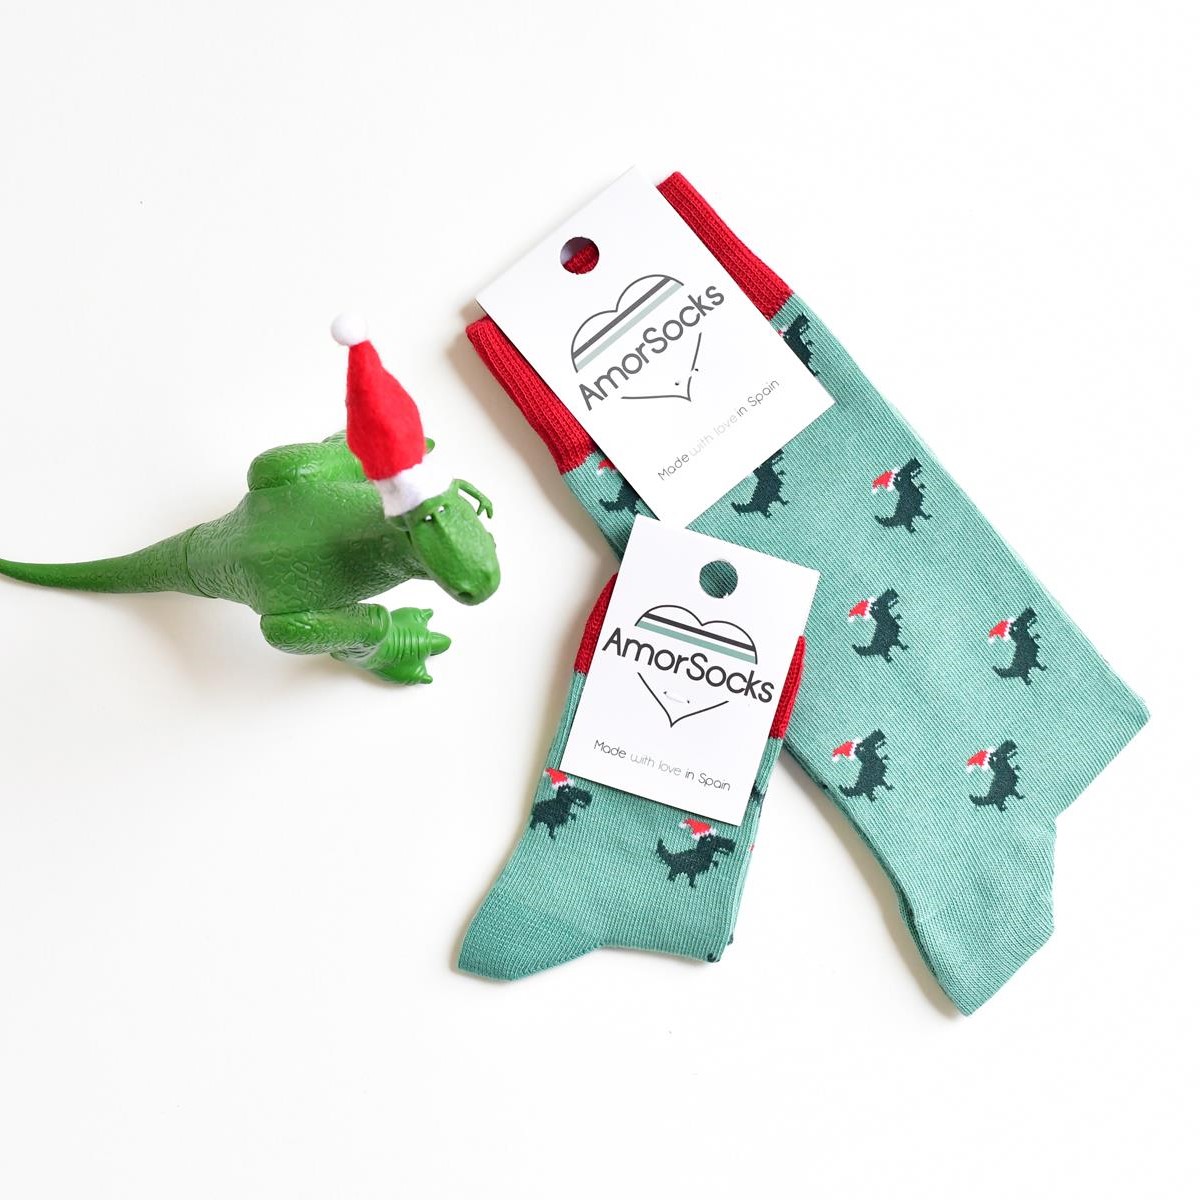 amorsocks-calcetines-socks-dinos-noel-navidad-christmas-dinosaurios-trex-tiranoraurio-verde-rojo-green-red-niños-niñas-kids-papa-noel-colección